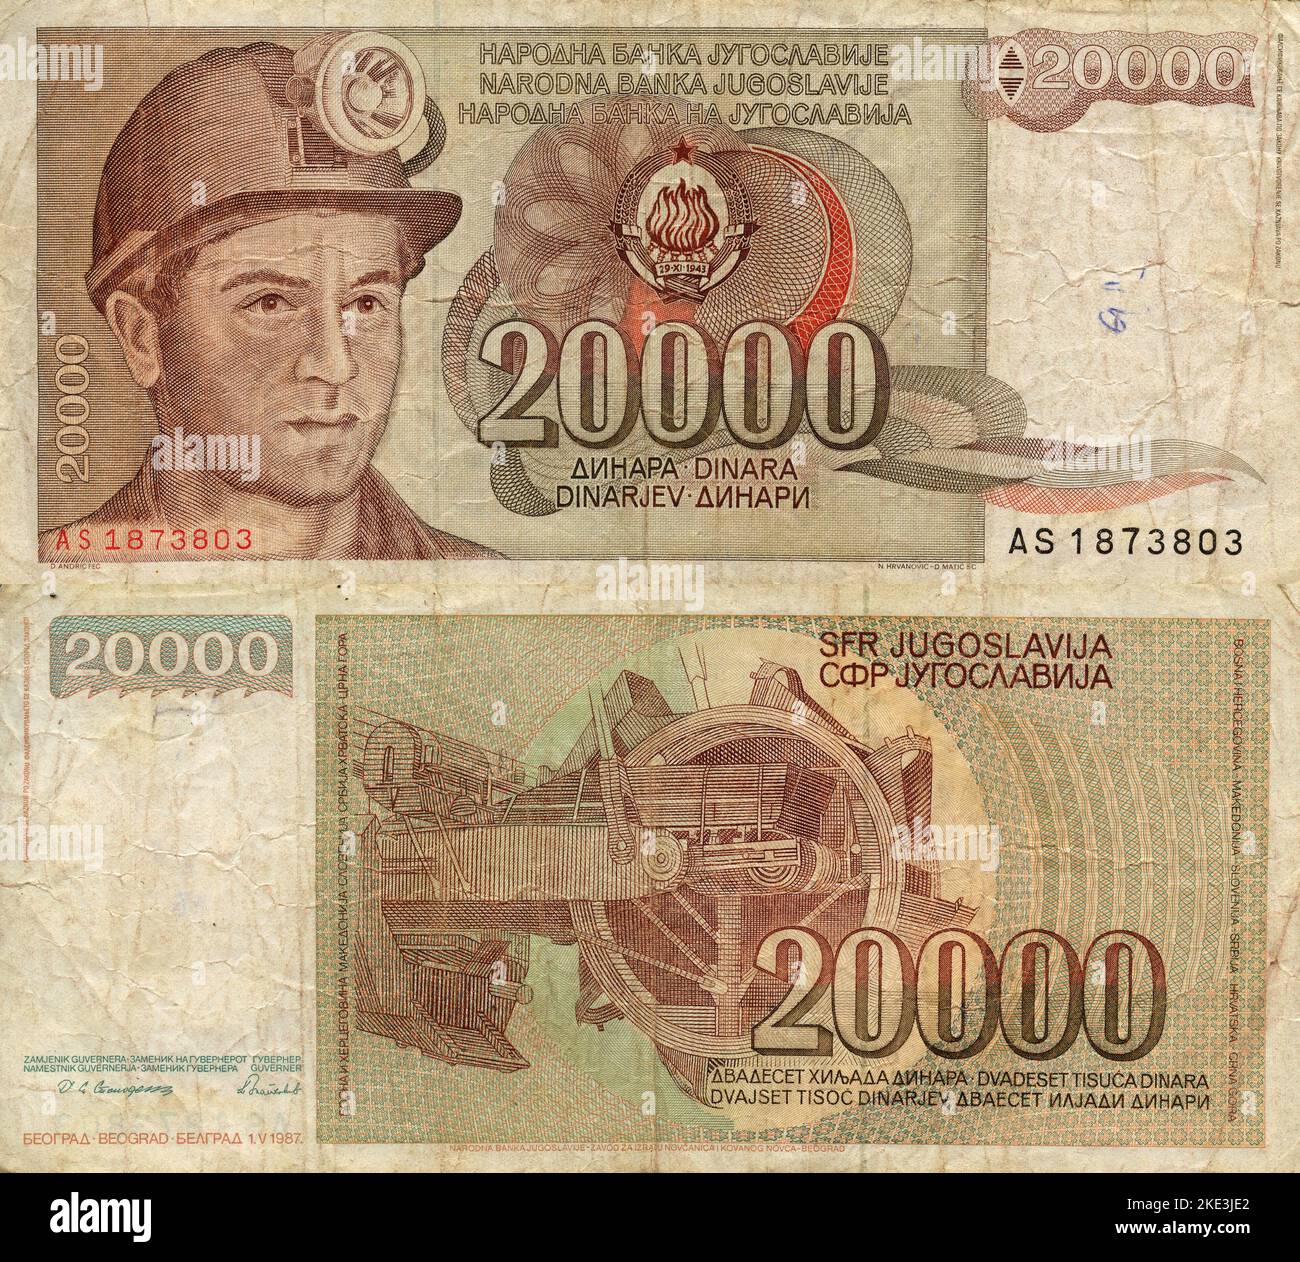 Central Bank of Socialist Federal Republic of Yugoslavia 20000 Dinara Banknote, Belgrade 1987 Stock Photo